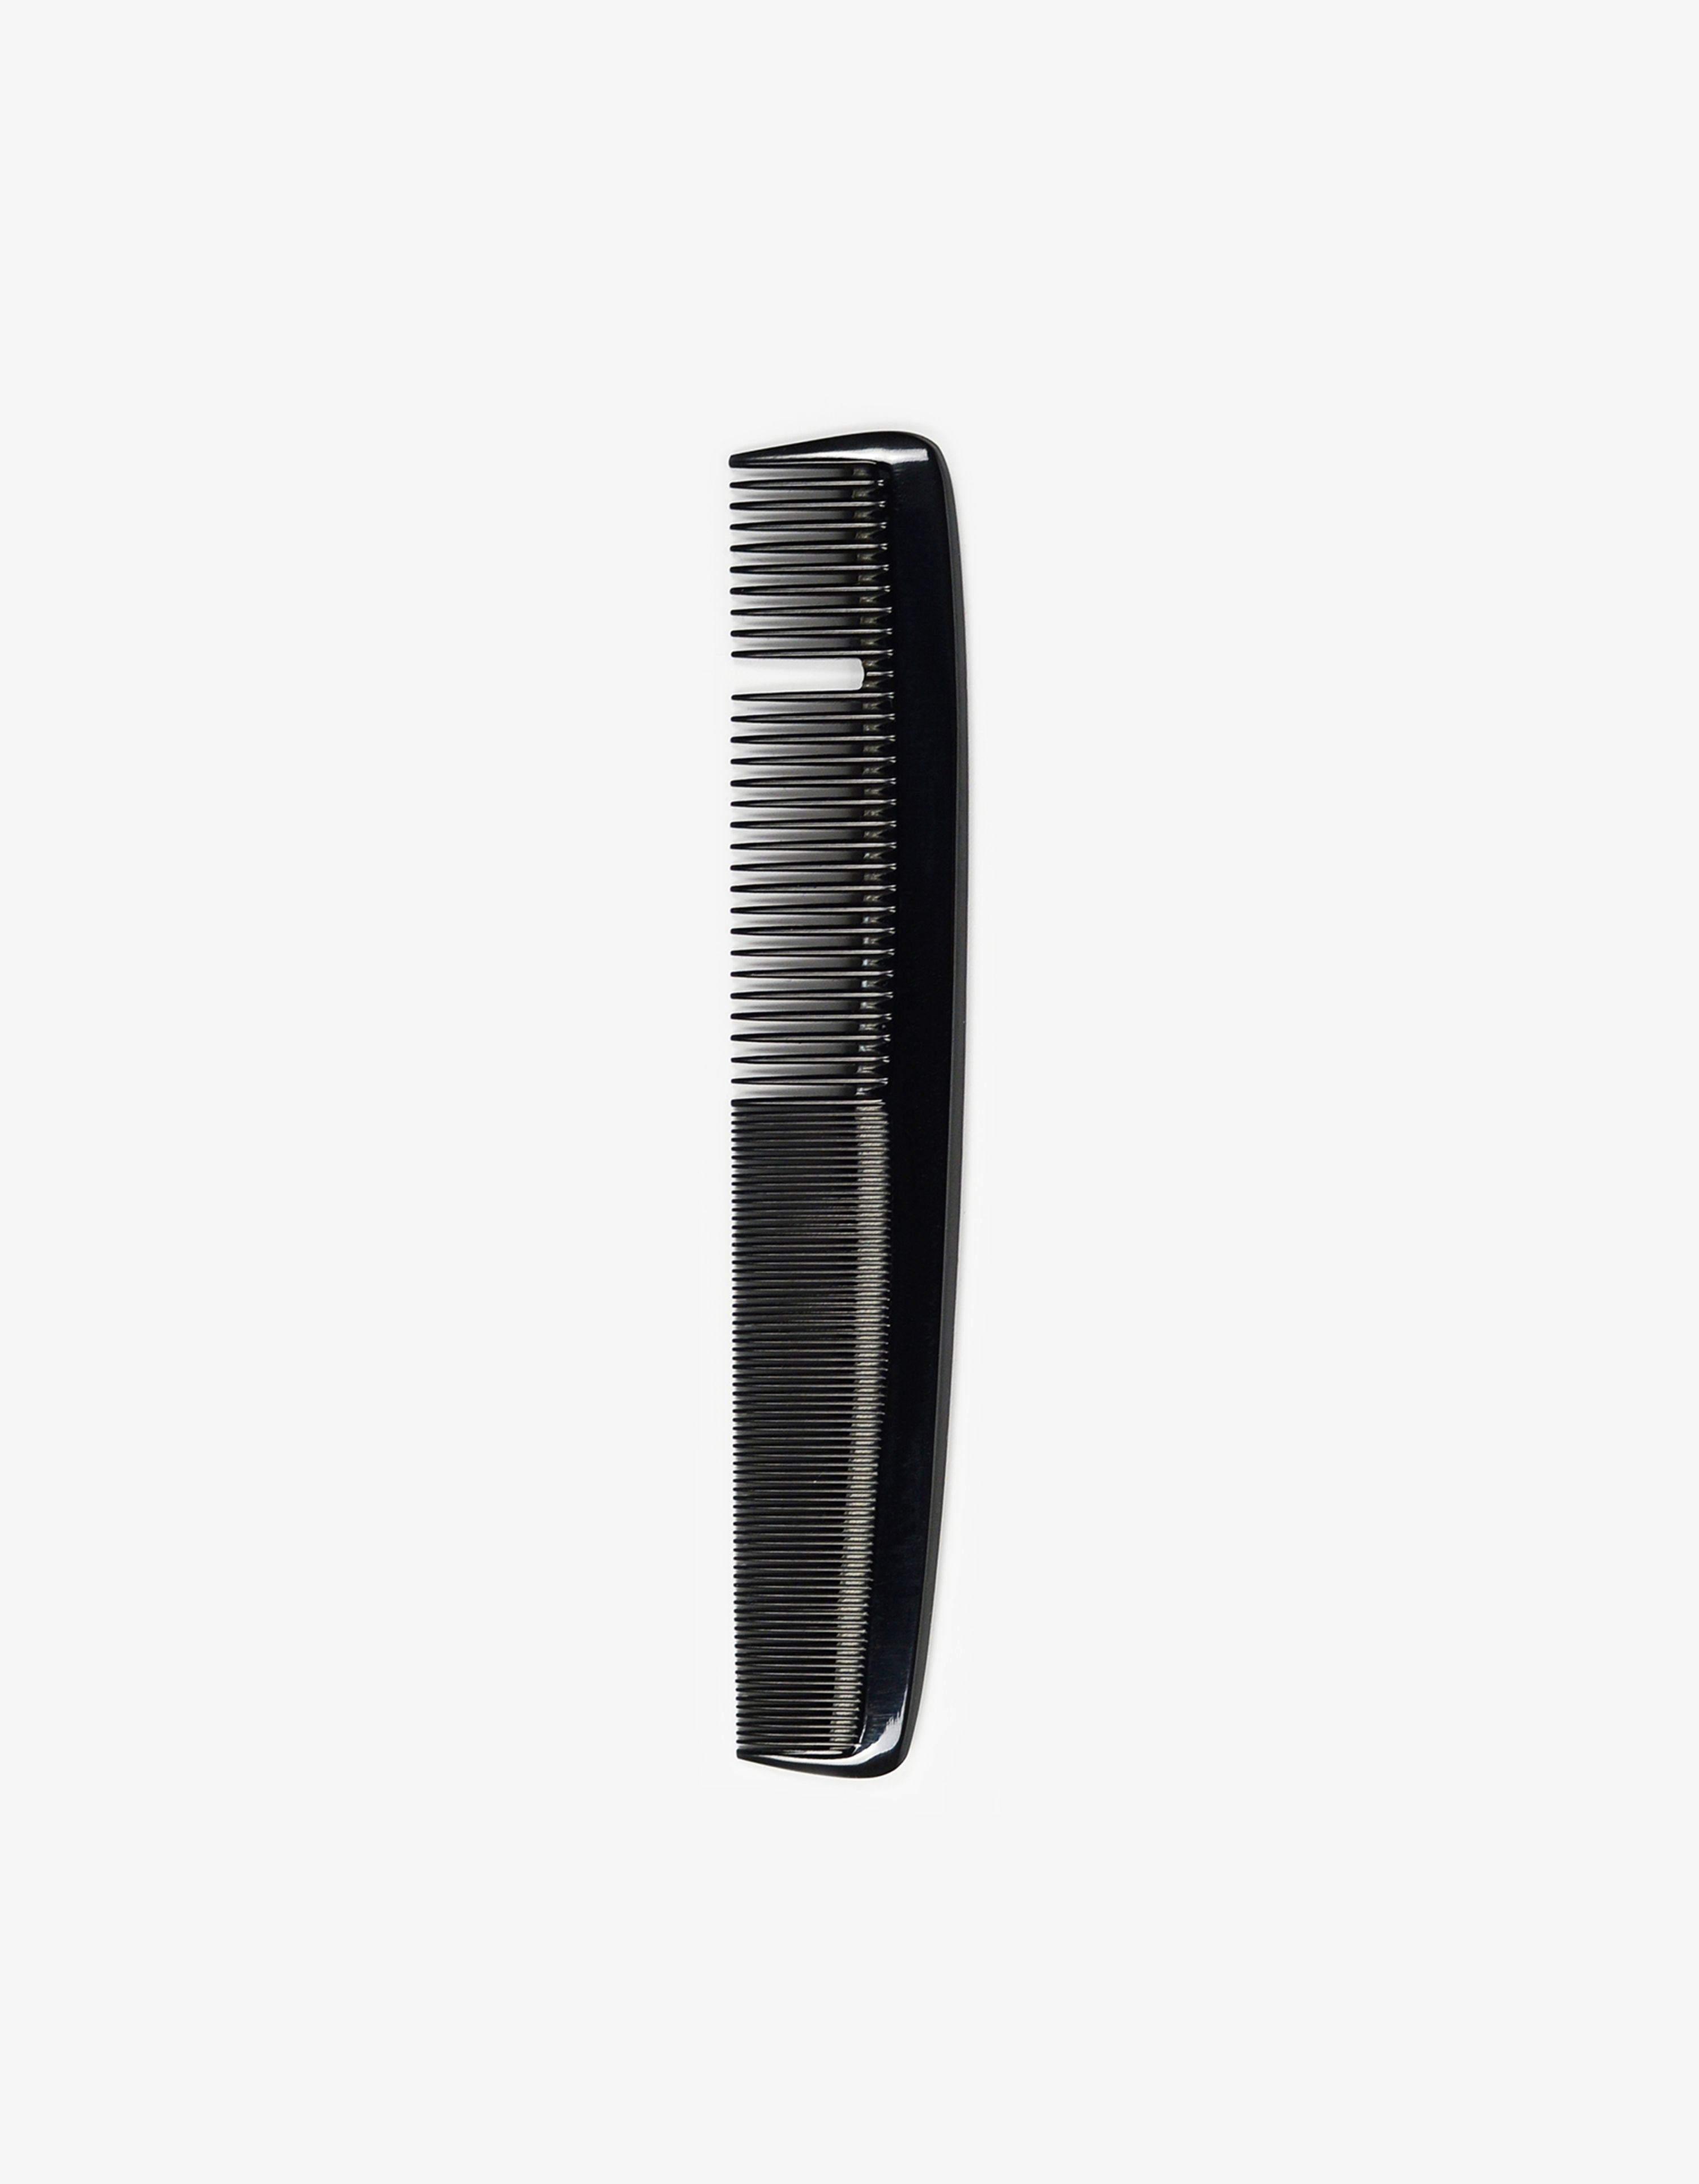 comb – 1 of 100